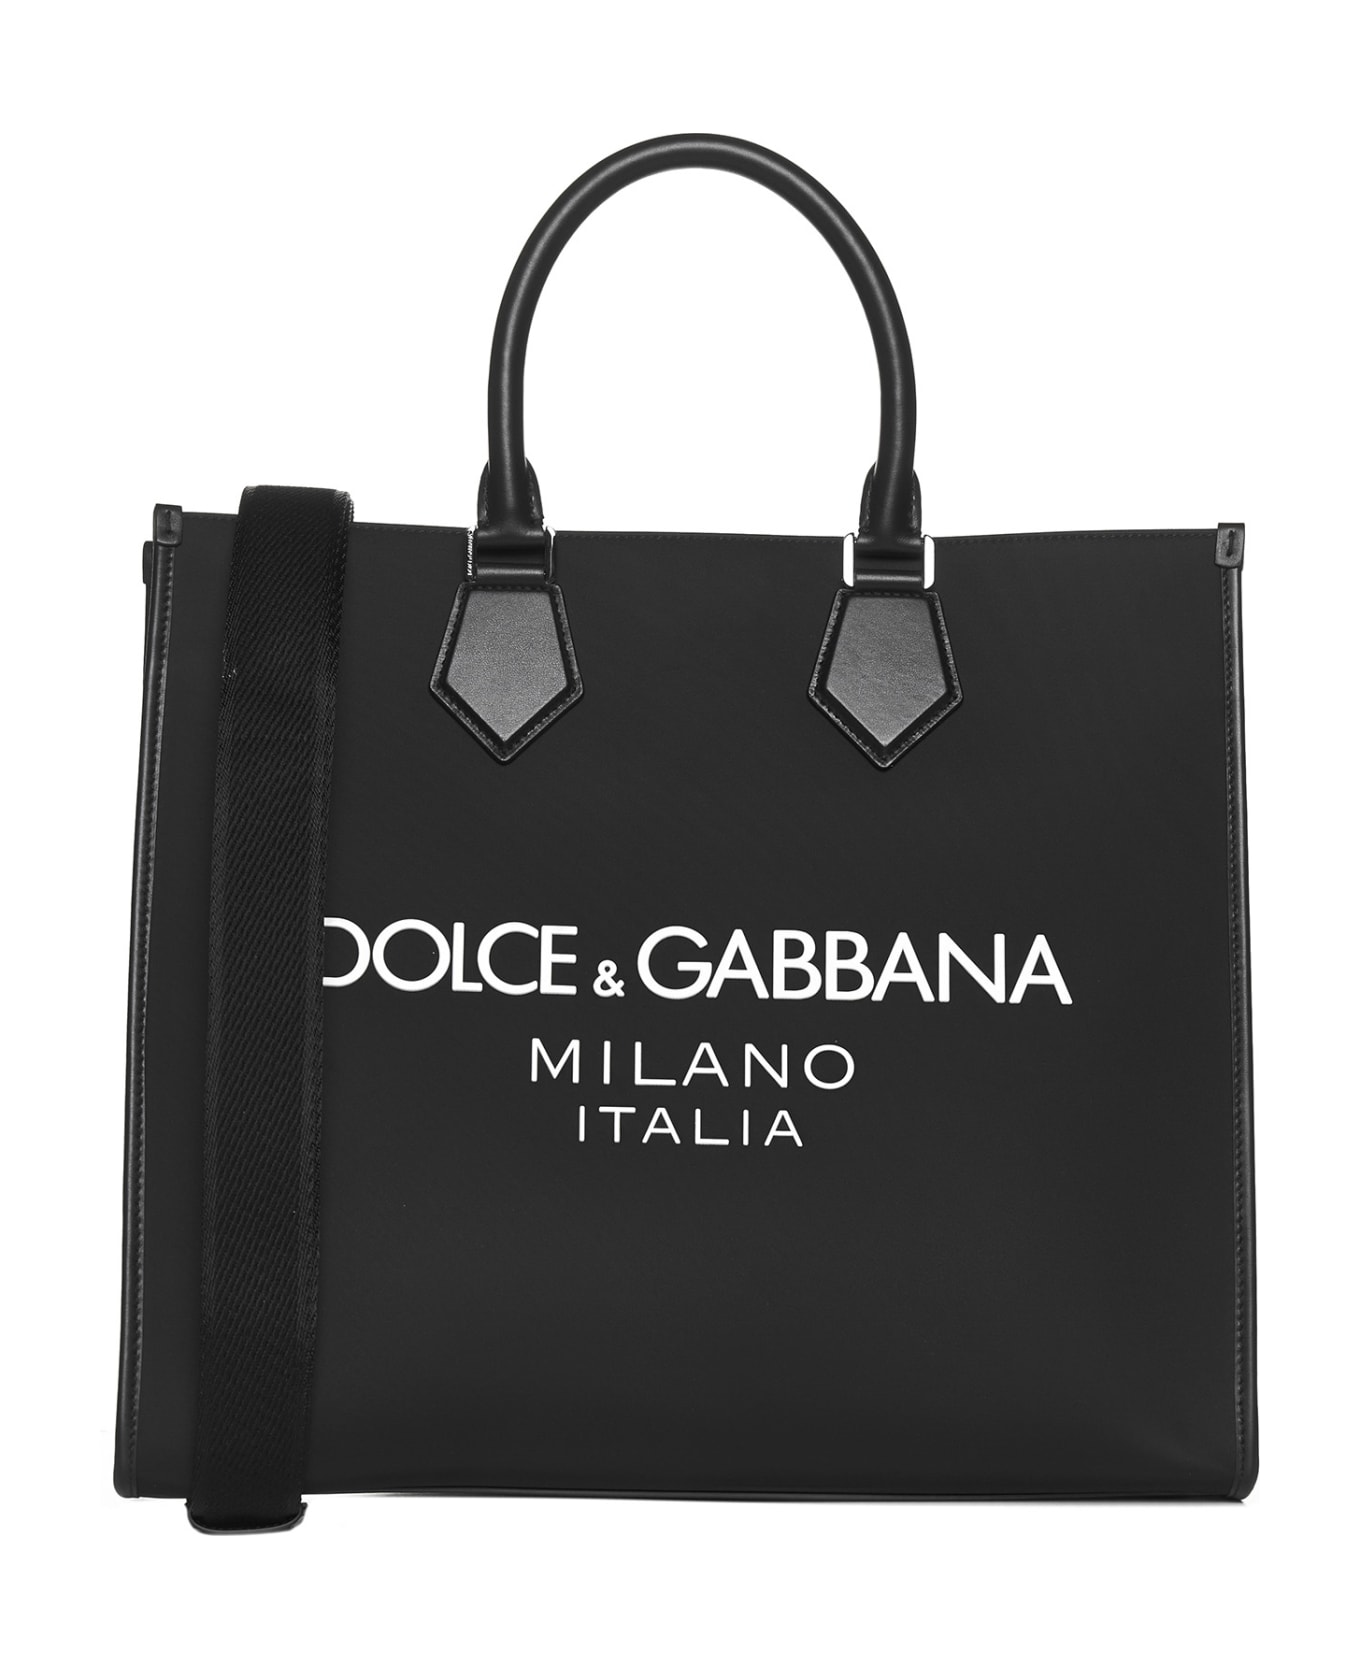 Dolce & Gabbana Tote - Black トートバッグ